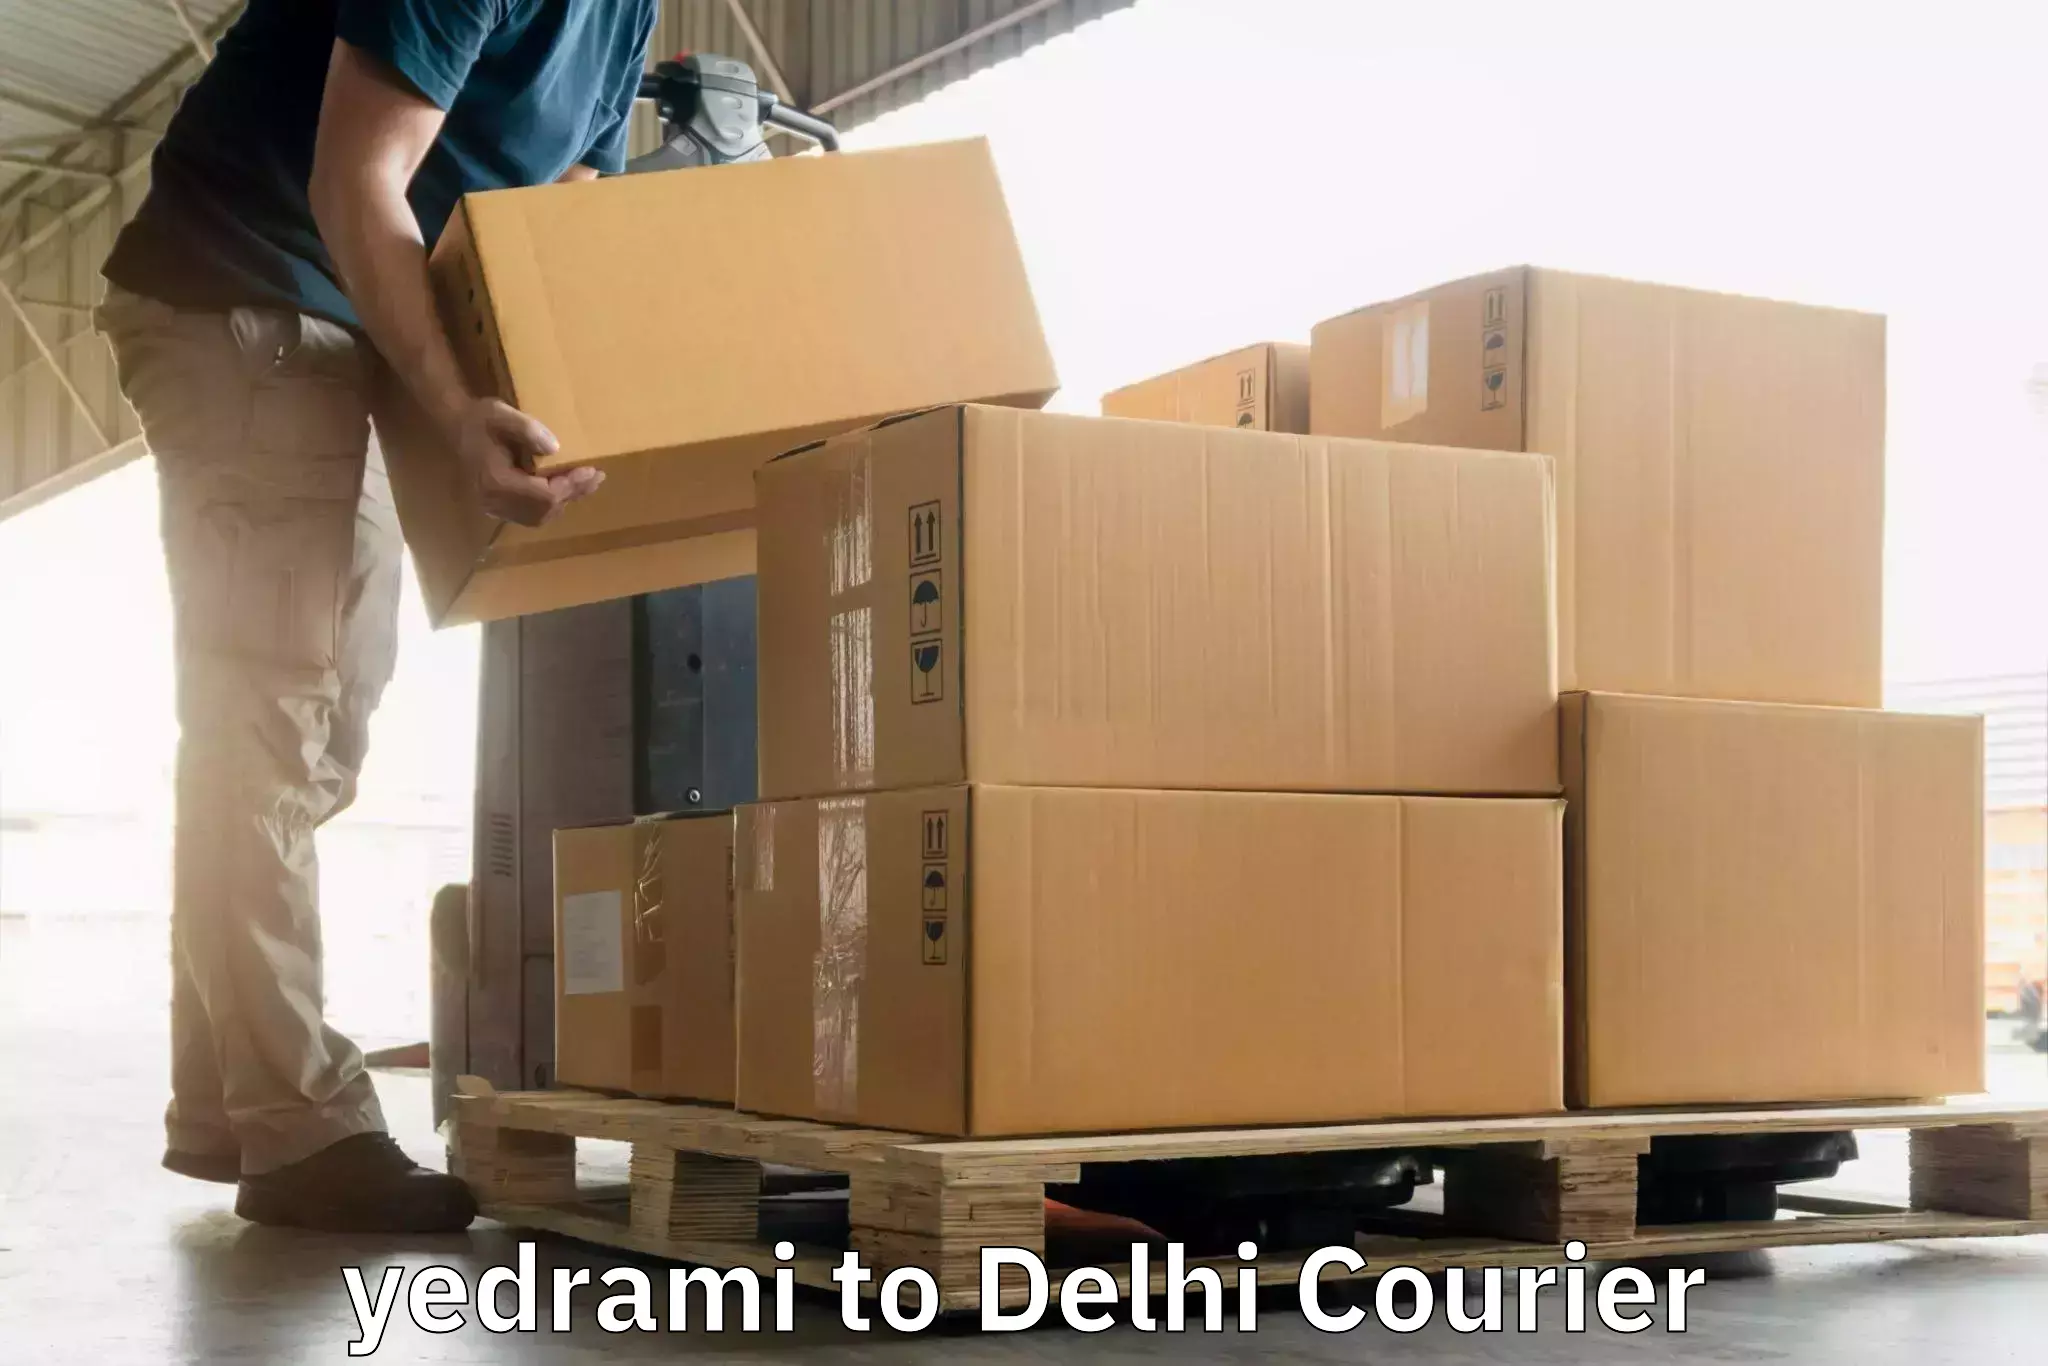 Weekend courier service yedrami to University of Delhi